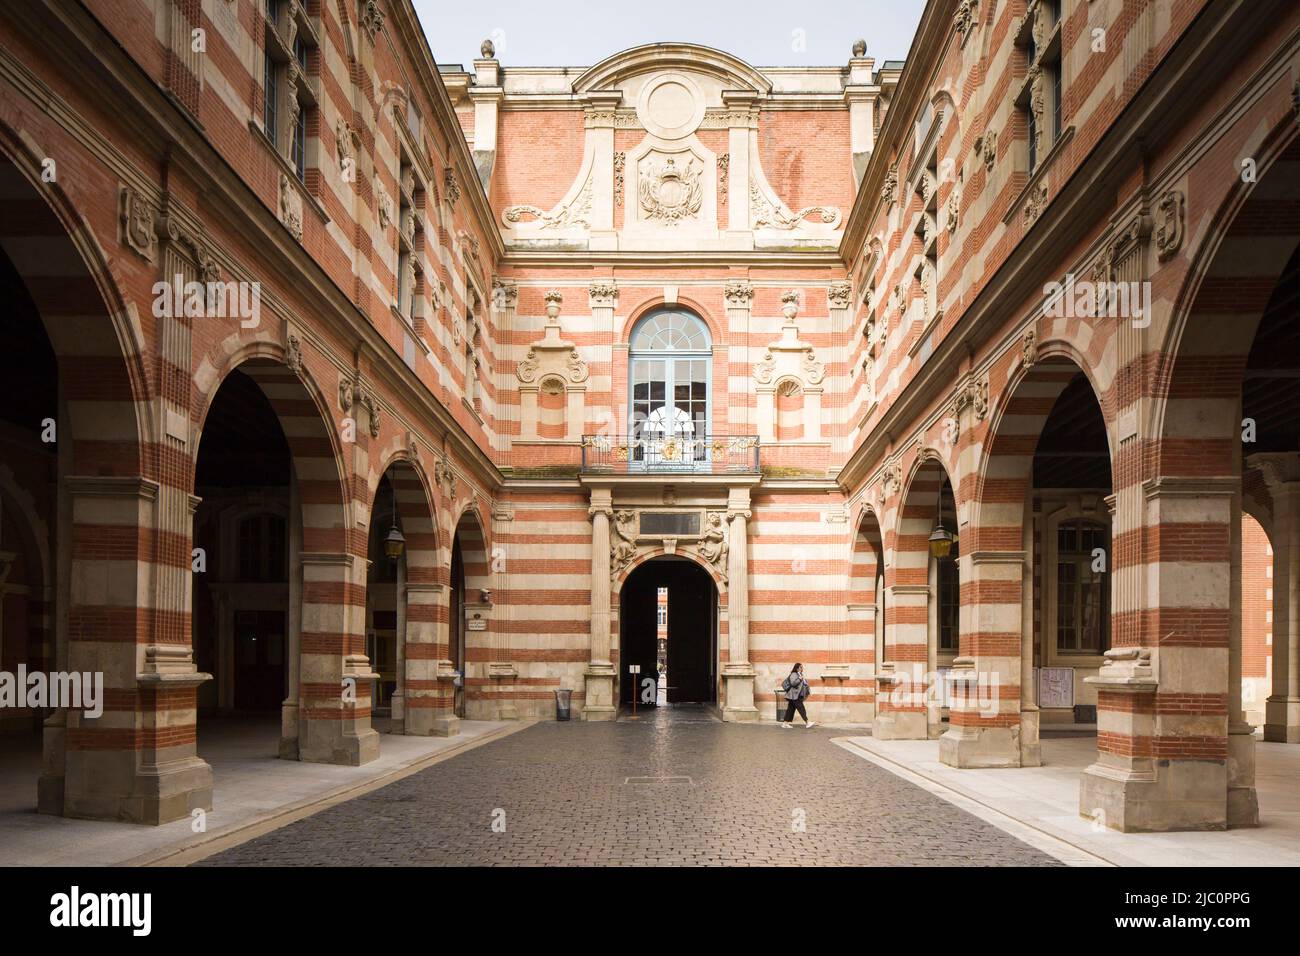 The Capitole de Toulouse (Hotel de Ville or Town Hall), France. Internal Courtyard with Renaissance motifs. Stock Photo